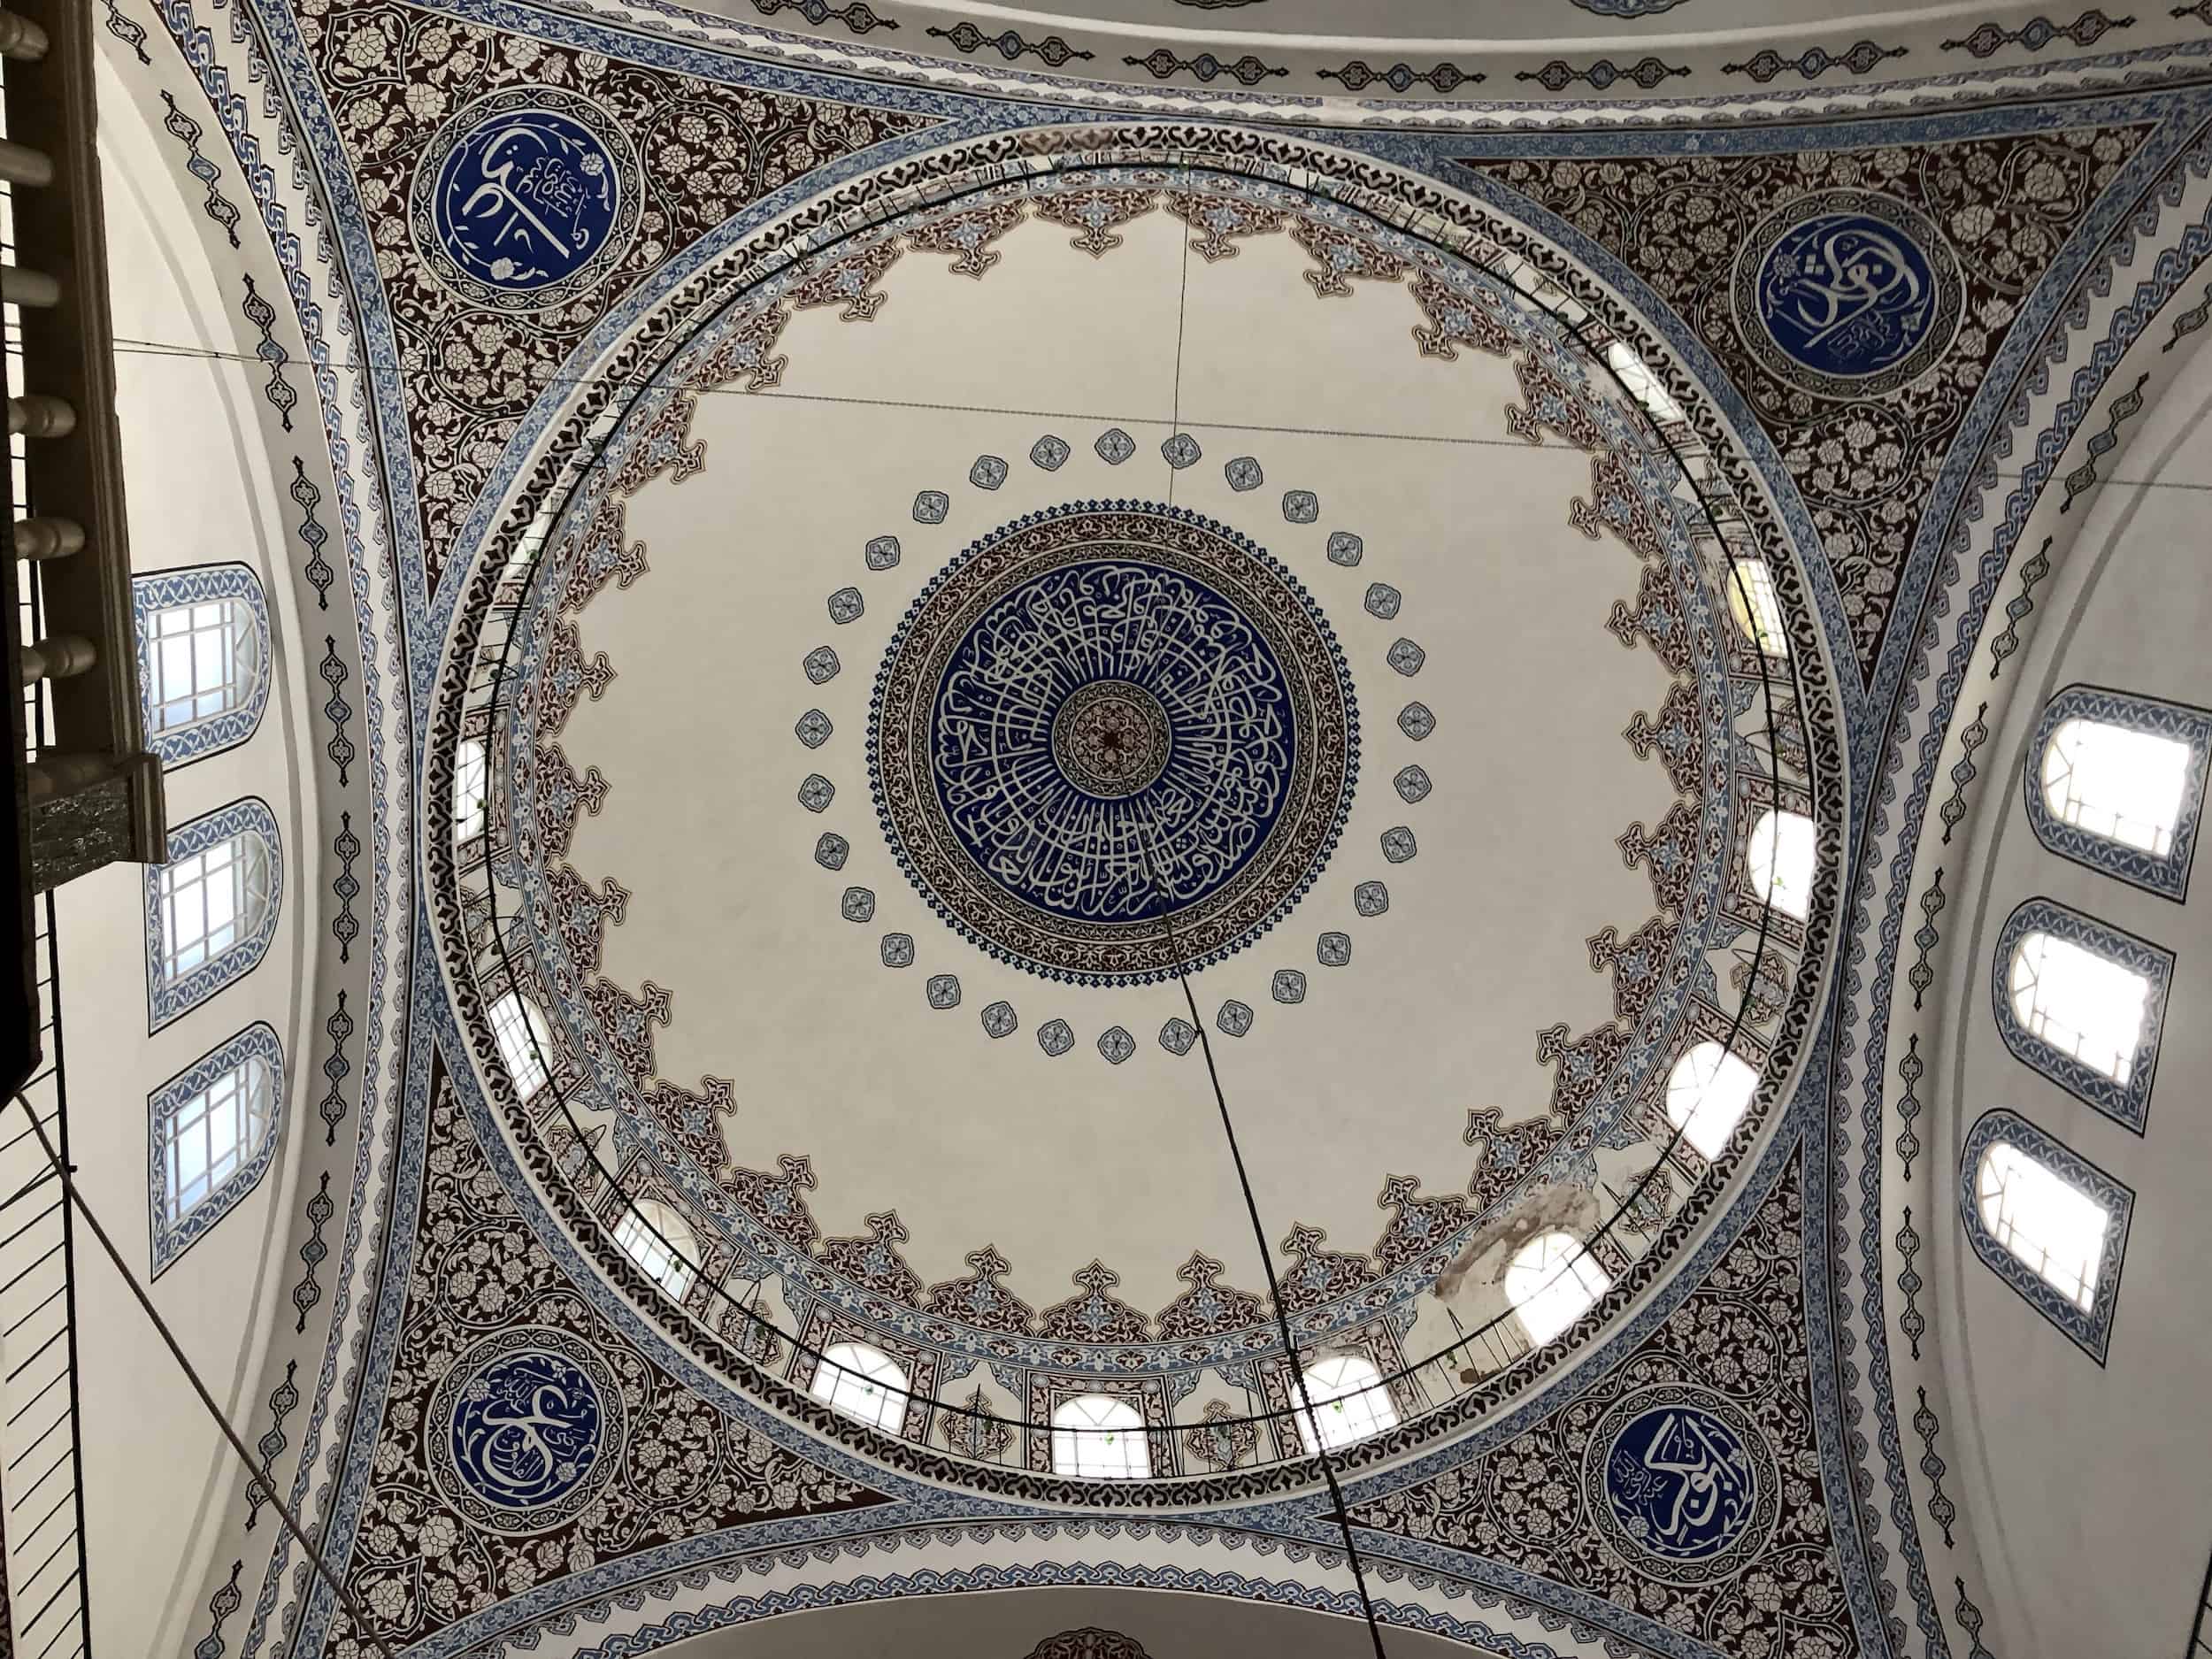 Dome of the Atik Ali Pasha Mosque in Çemberlitaş, Istanbul, Turkey